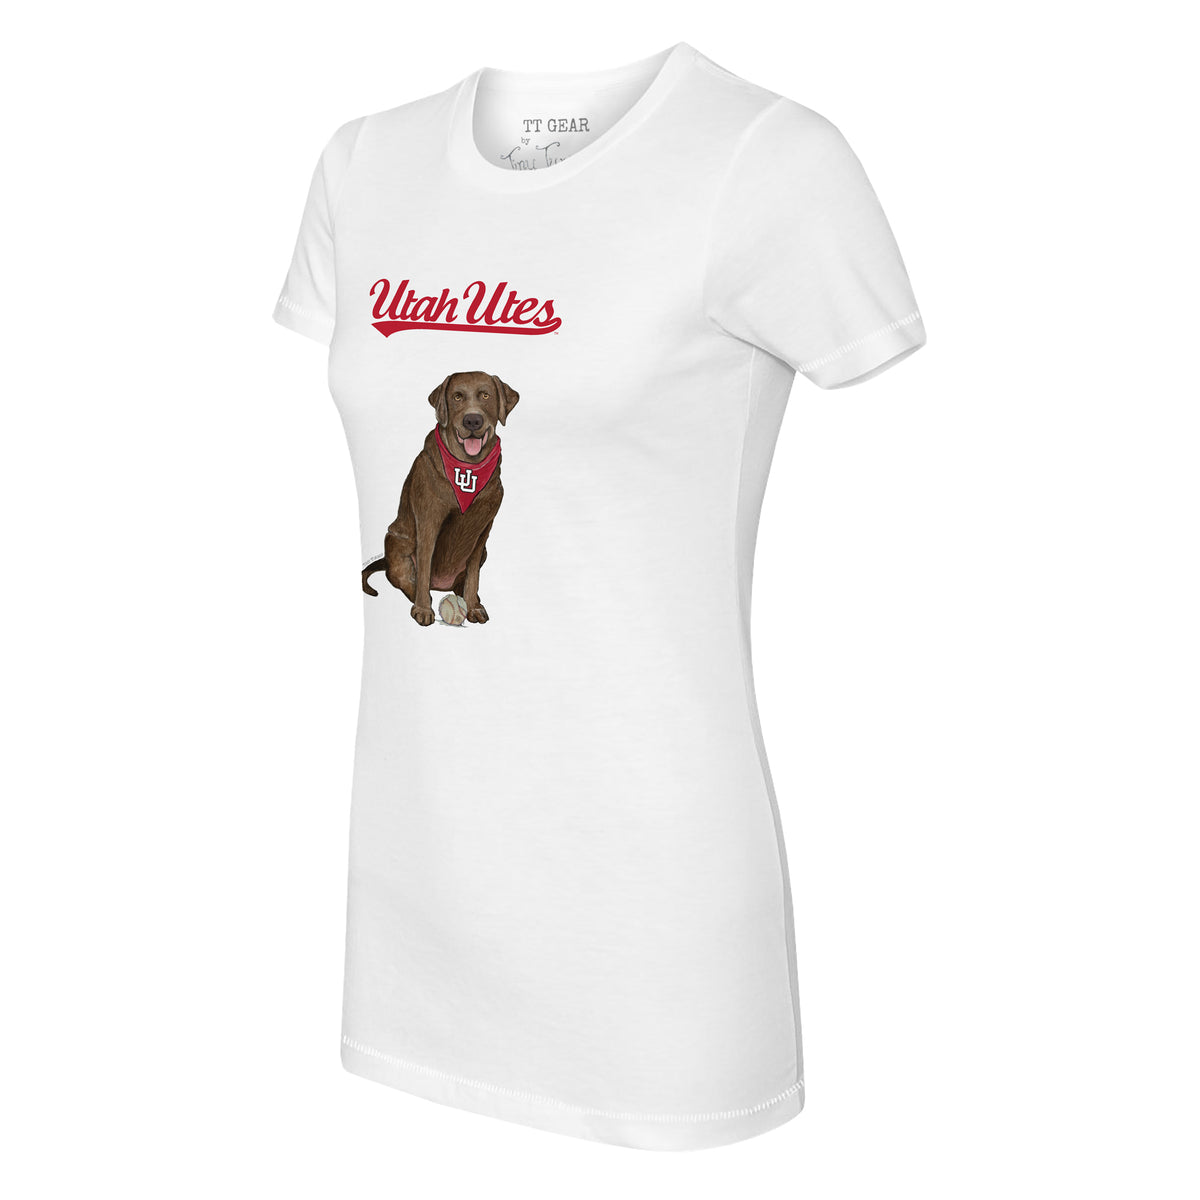 Utah Utes Chocolate Labrador Retriever Tee Shirt